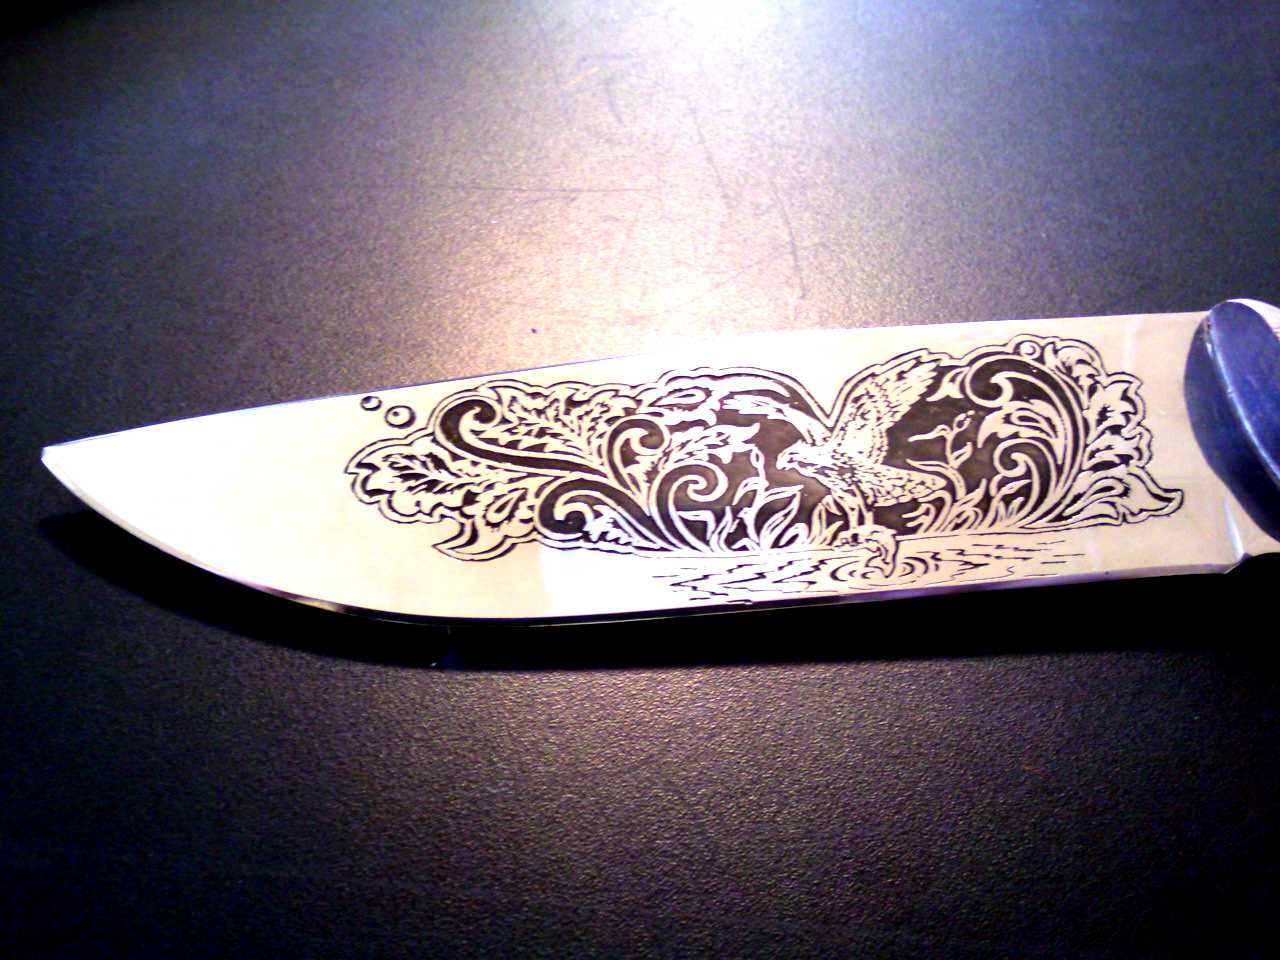 Рисунок на лезвие ножа. Травление металла. Травление клинка. Гравировка на металле. Гравировка на ноже.